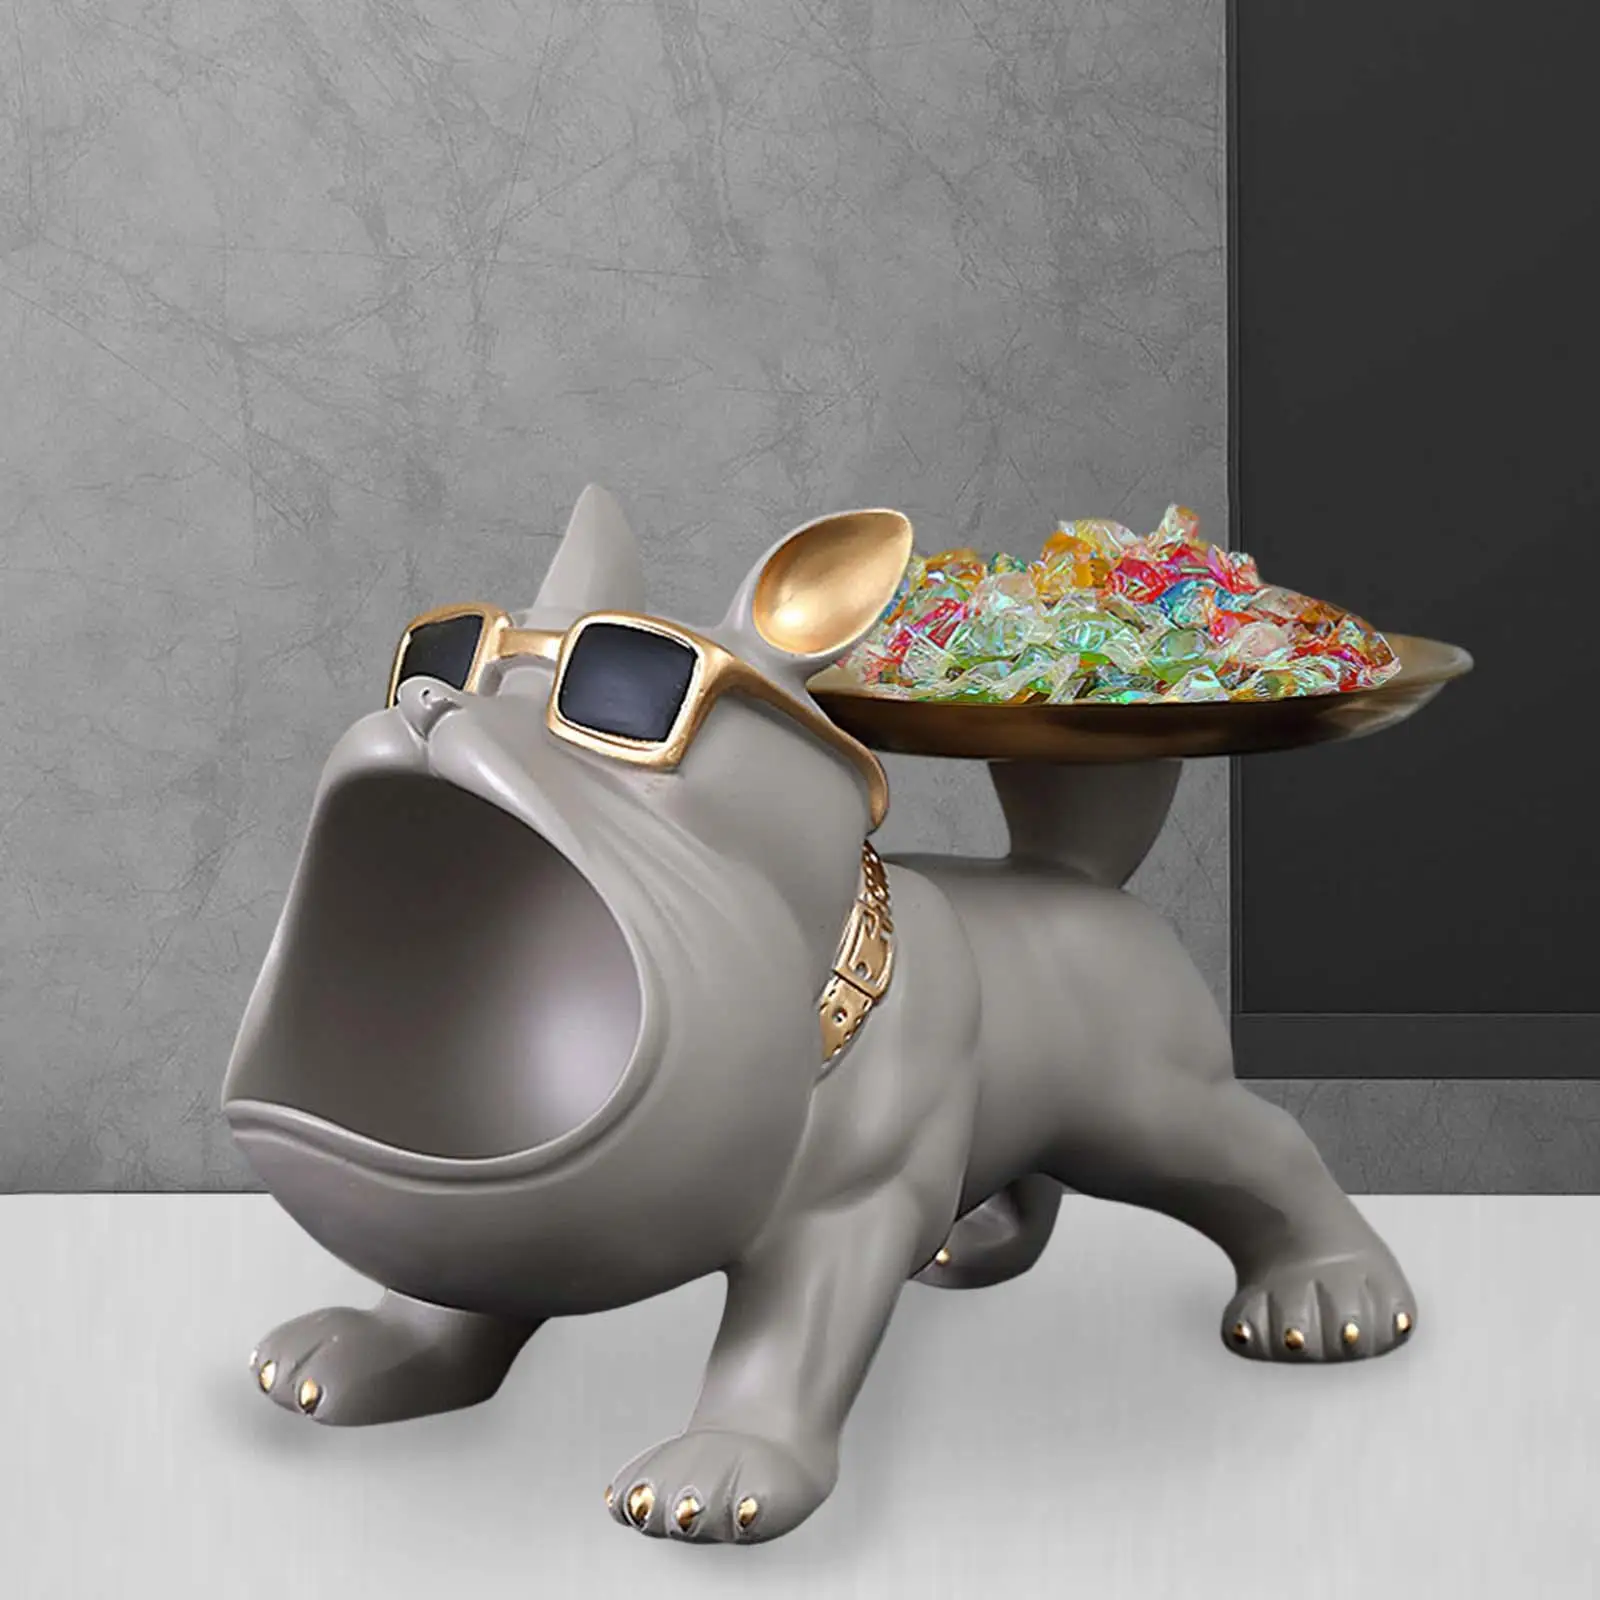 Dog Figurine Animal Sculpture Key Holder Desk Organizer Bowl Dog Storage Tray Statue for Home Office Party Desktop Modern Decor